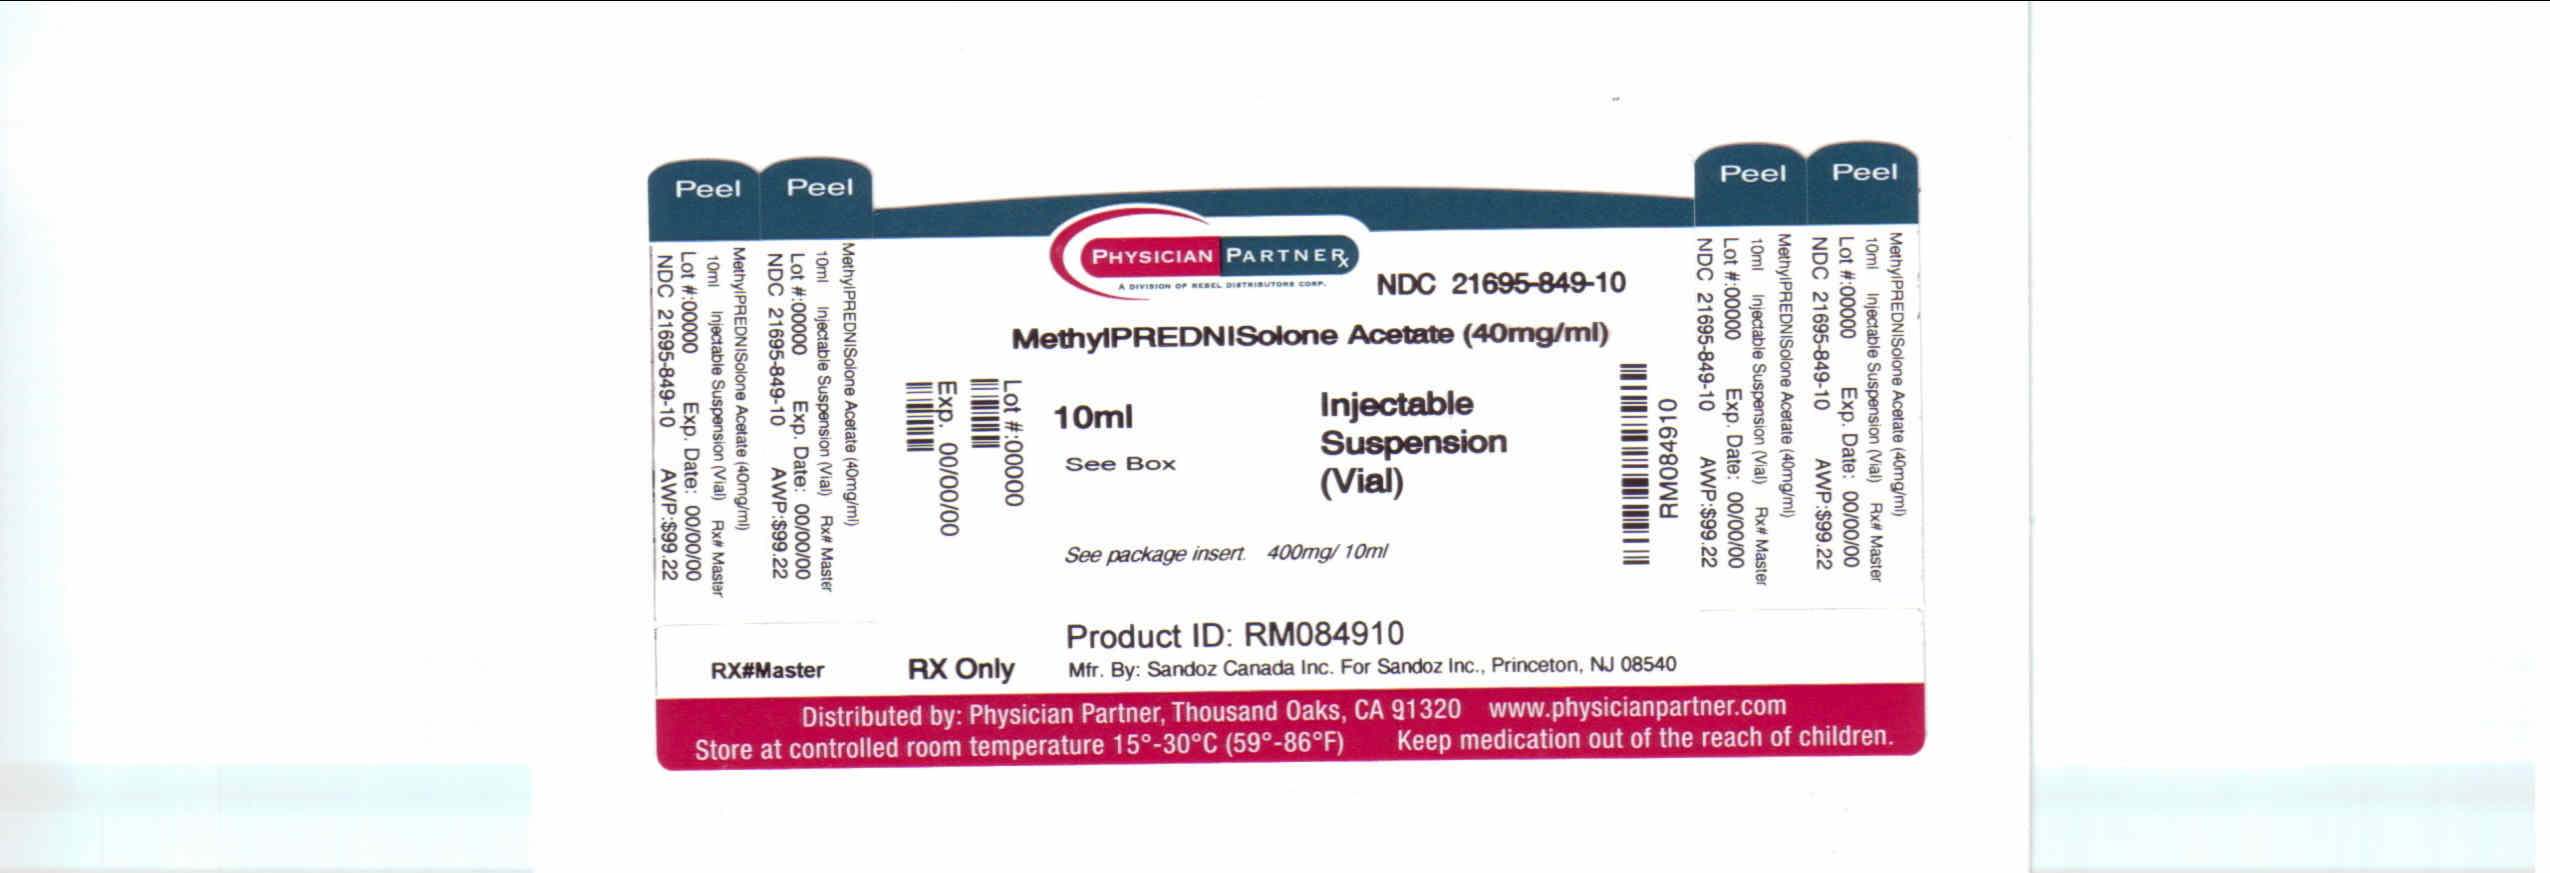 MethyPREDNISolone Acetate (40mg/ml)